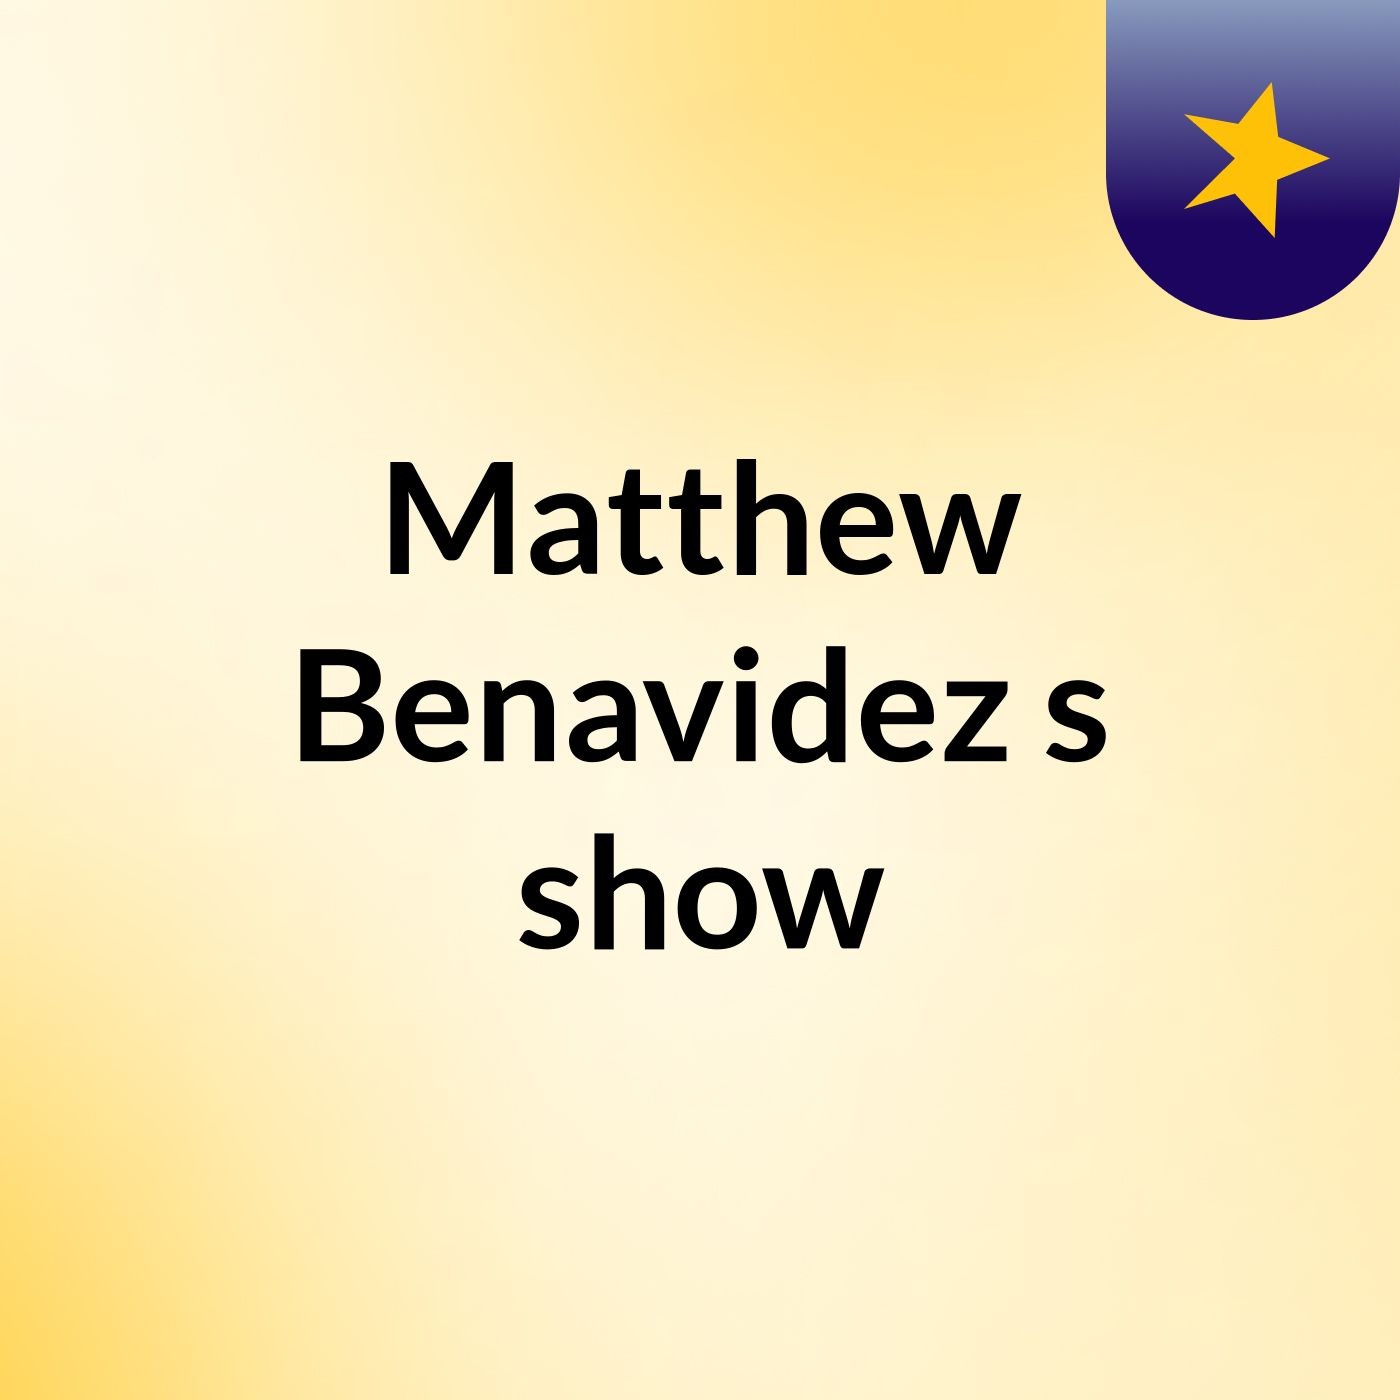 Matthew Benavidez's show